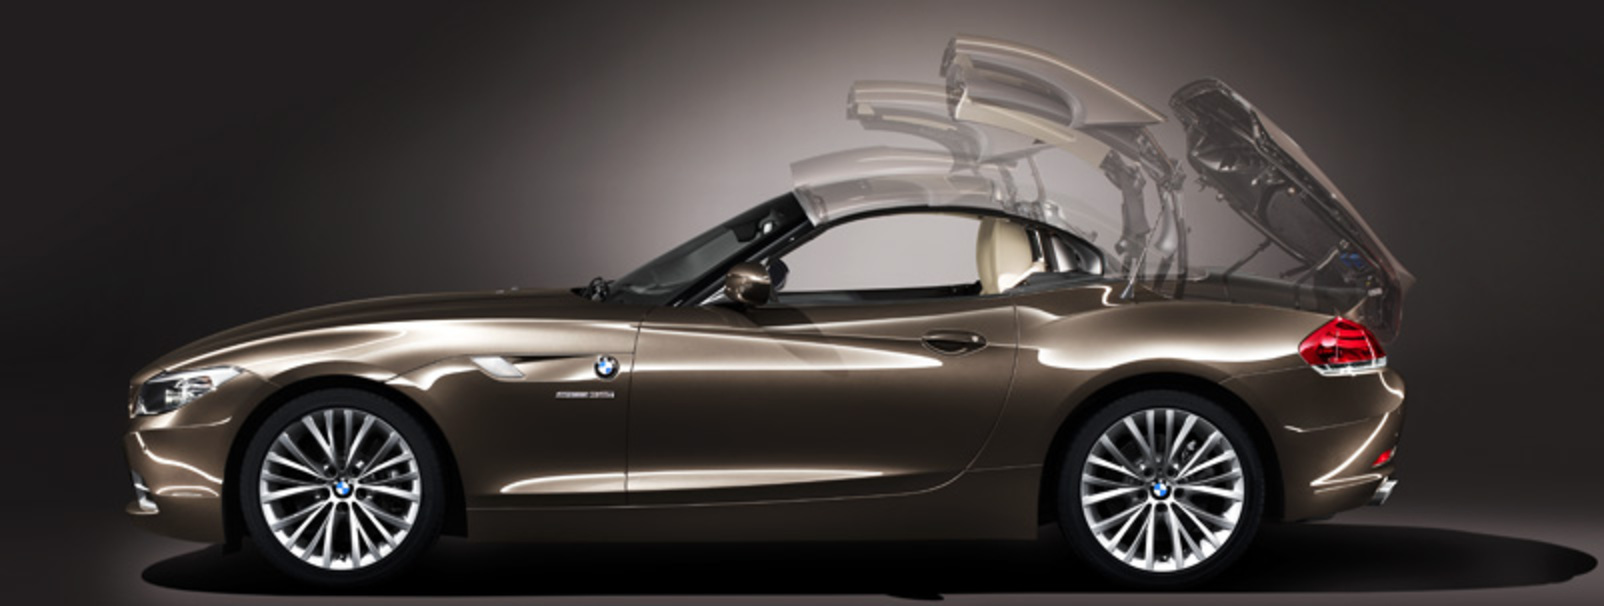 BMW Z4 Roadster 25l. View Download Wallpaper. 802x303. Comments